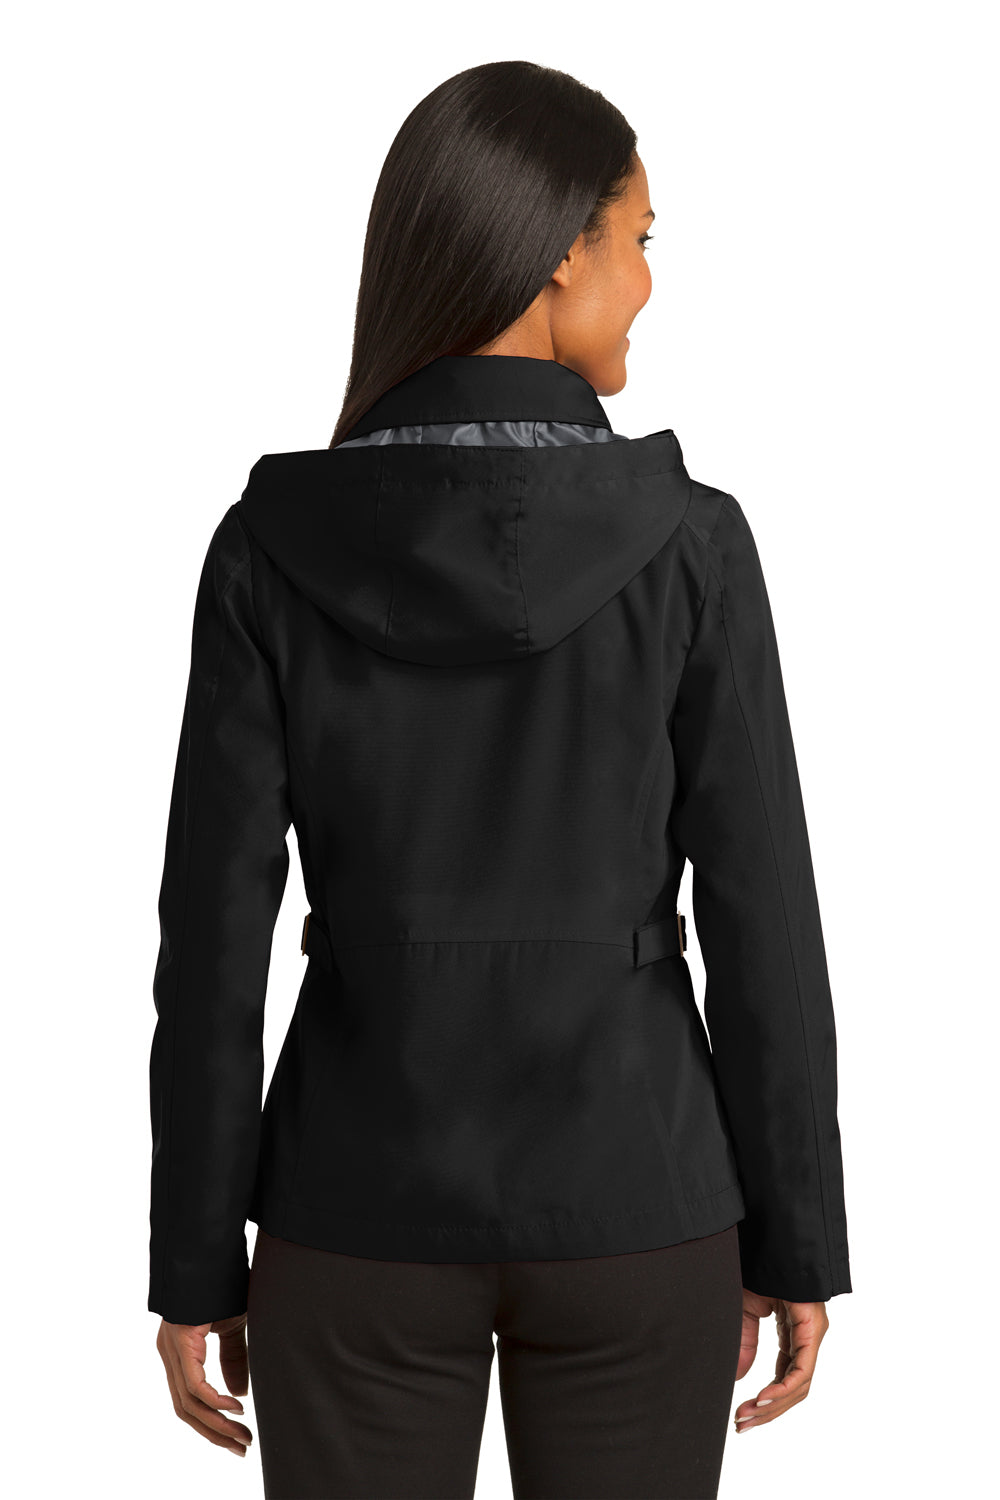 Port Authority L764 Womens Legacy Wind & Water Resistant Full Zip Hooded Jacket Black Back